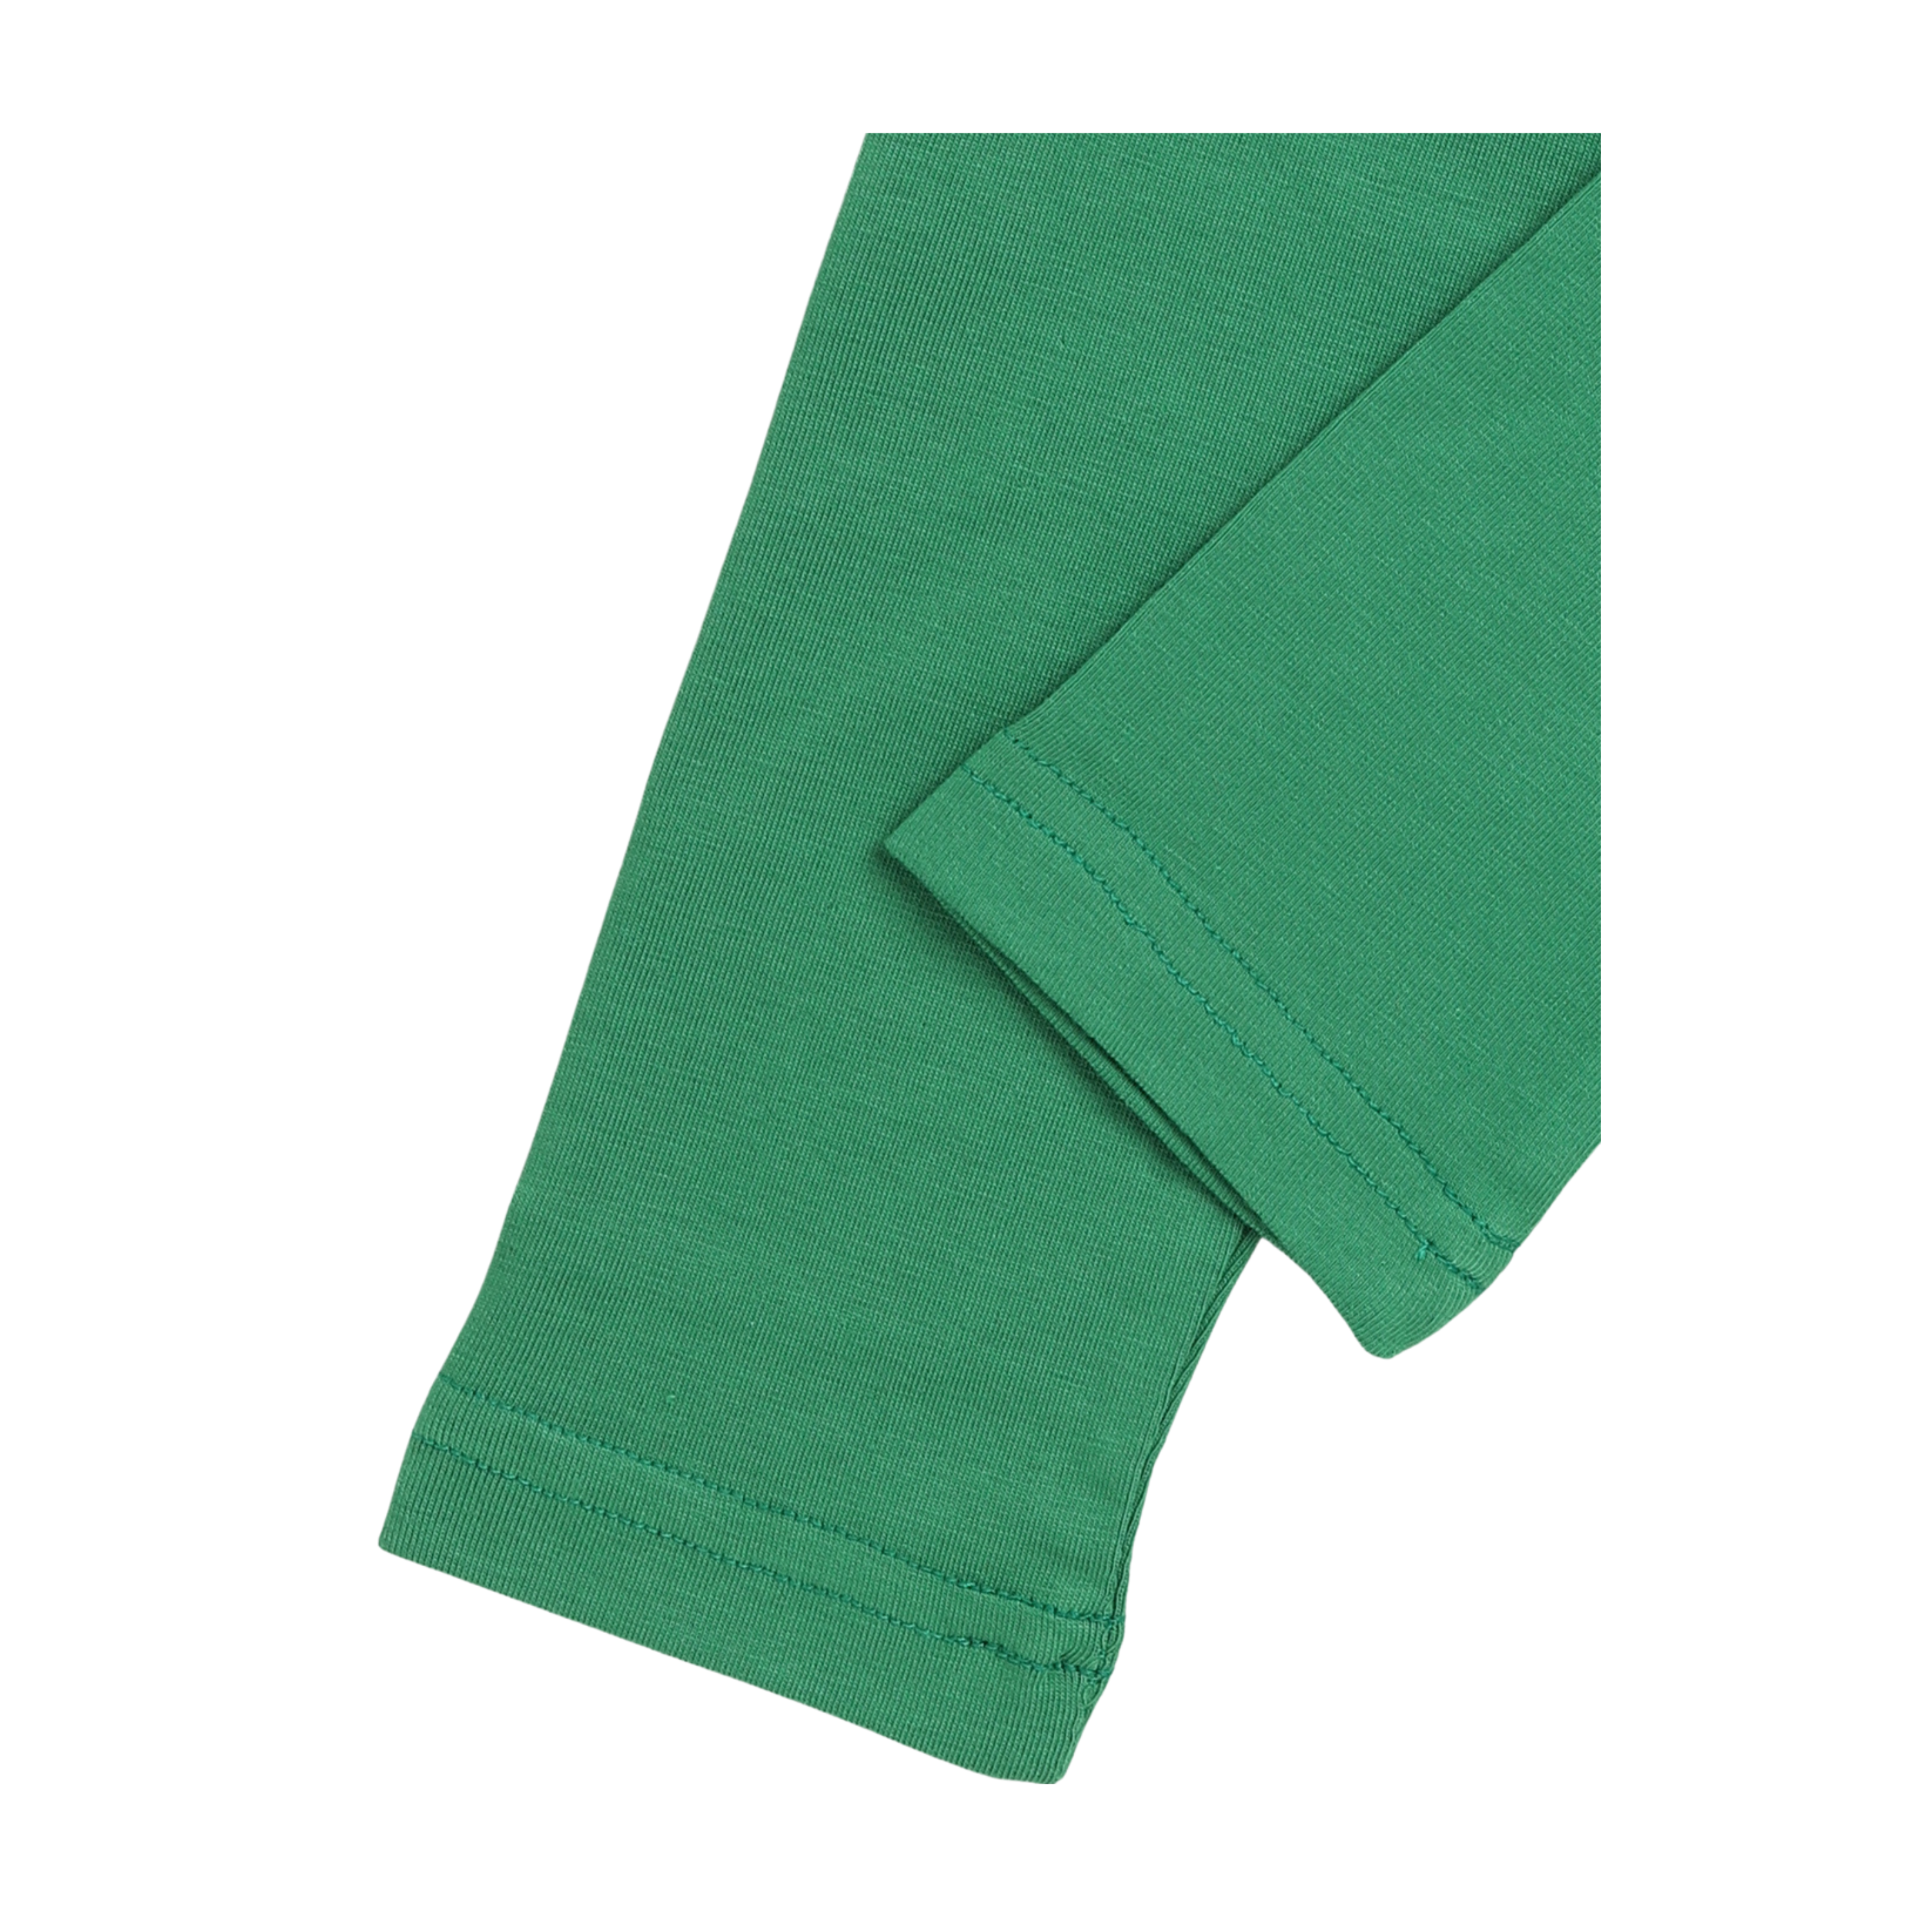 Stretchable Leggings For Girl's - Green